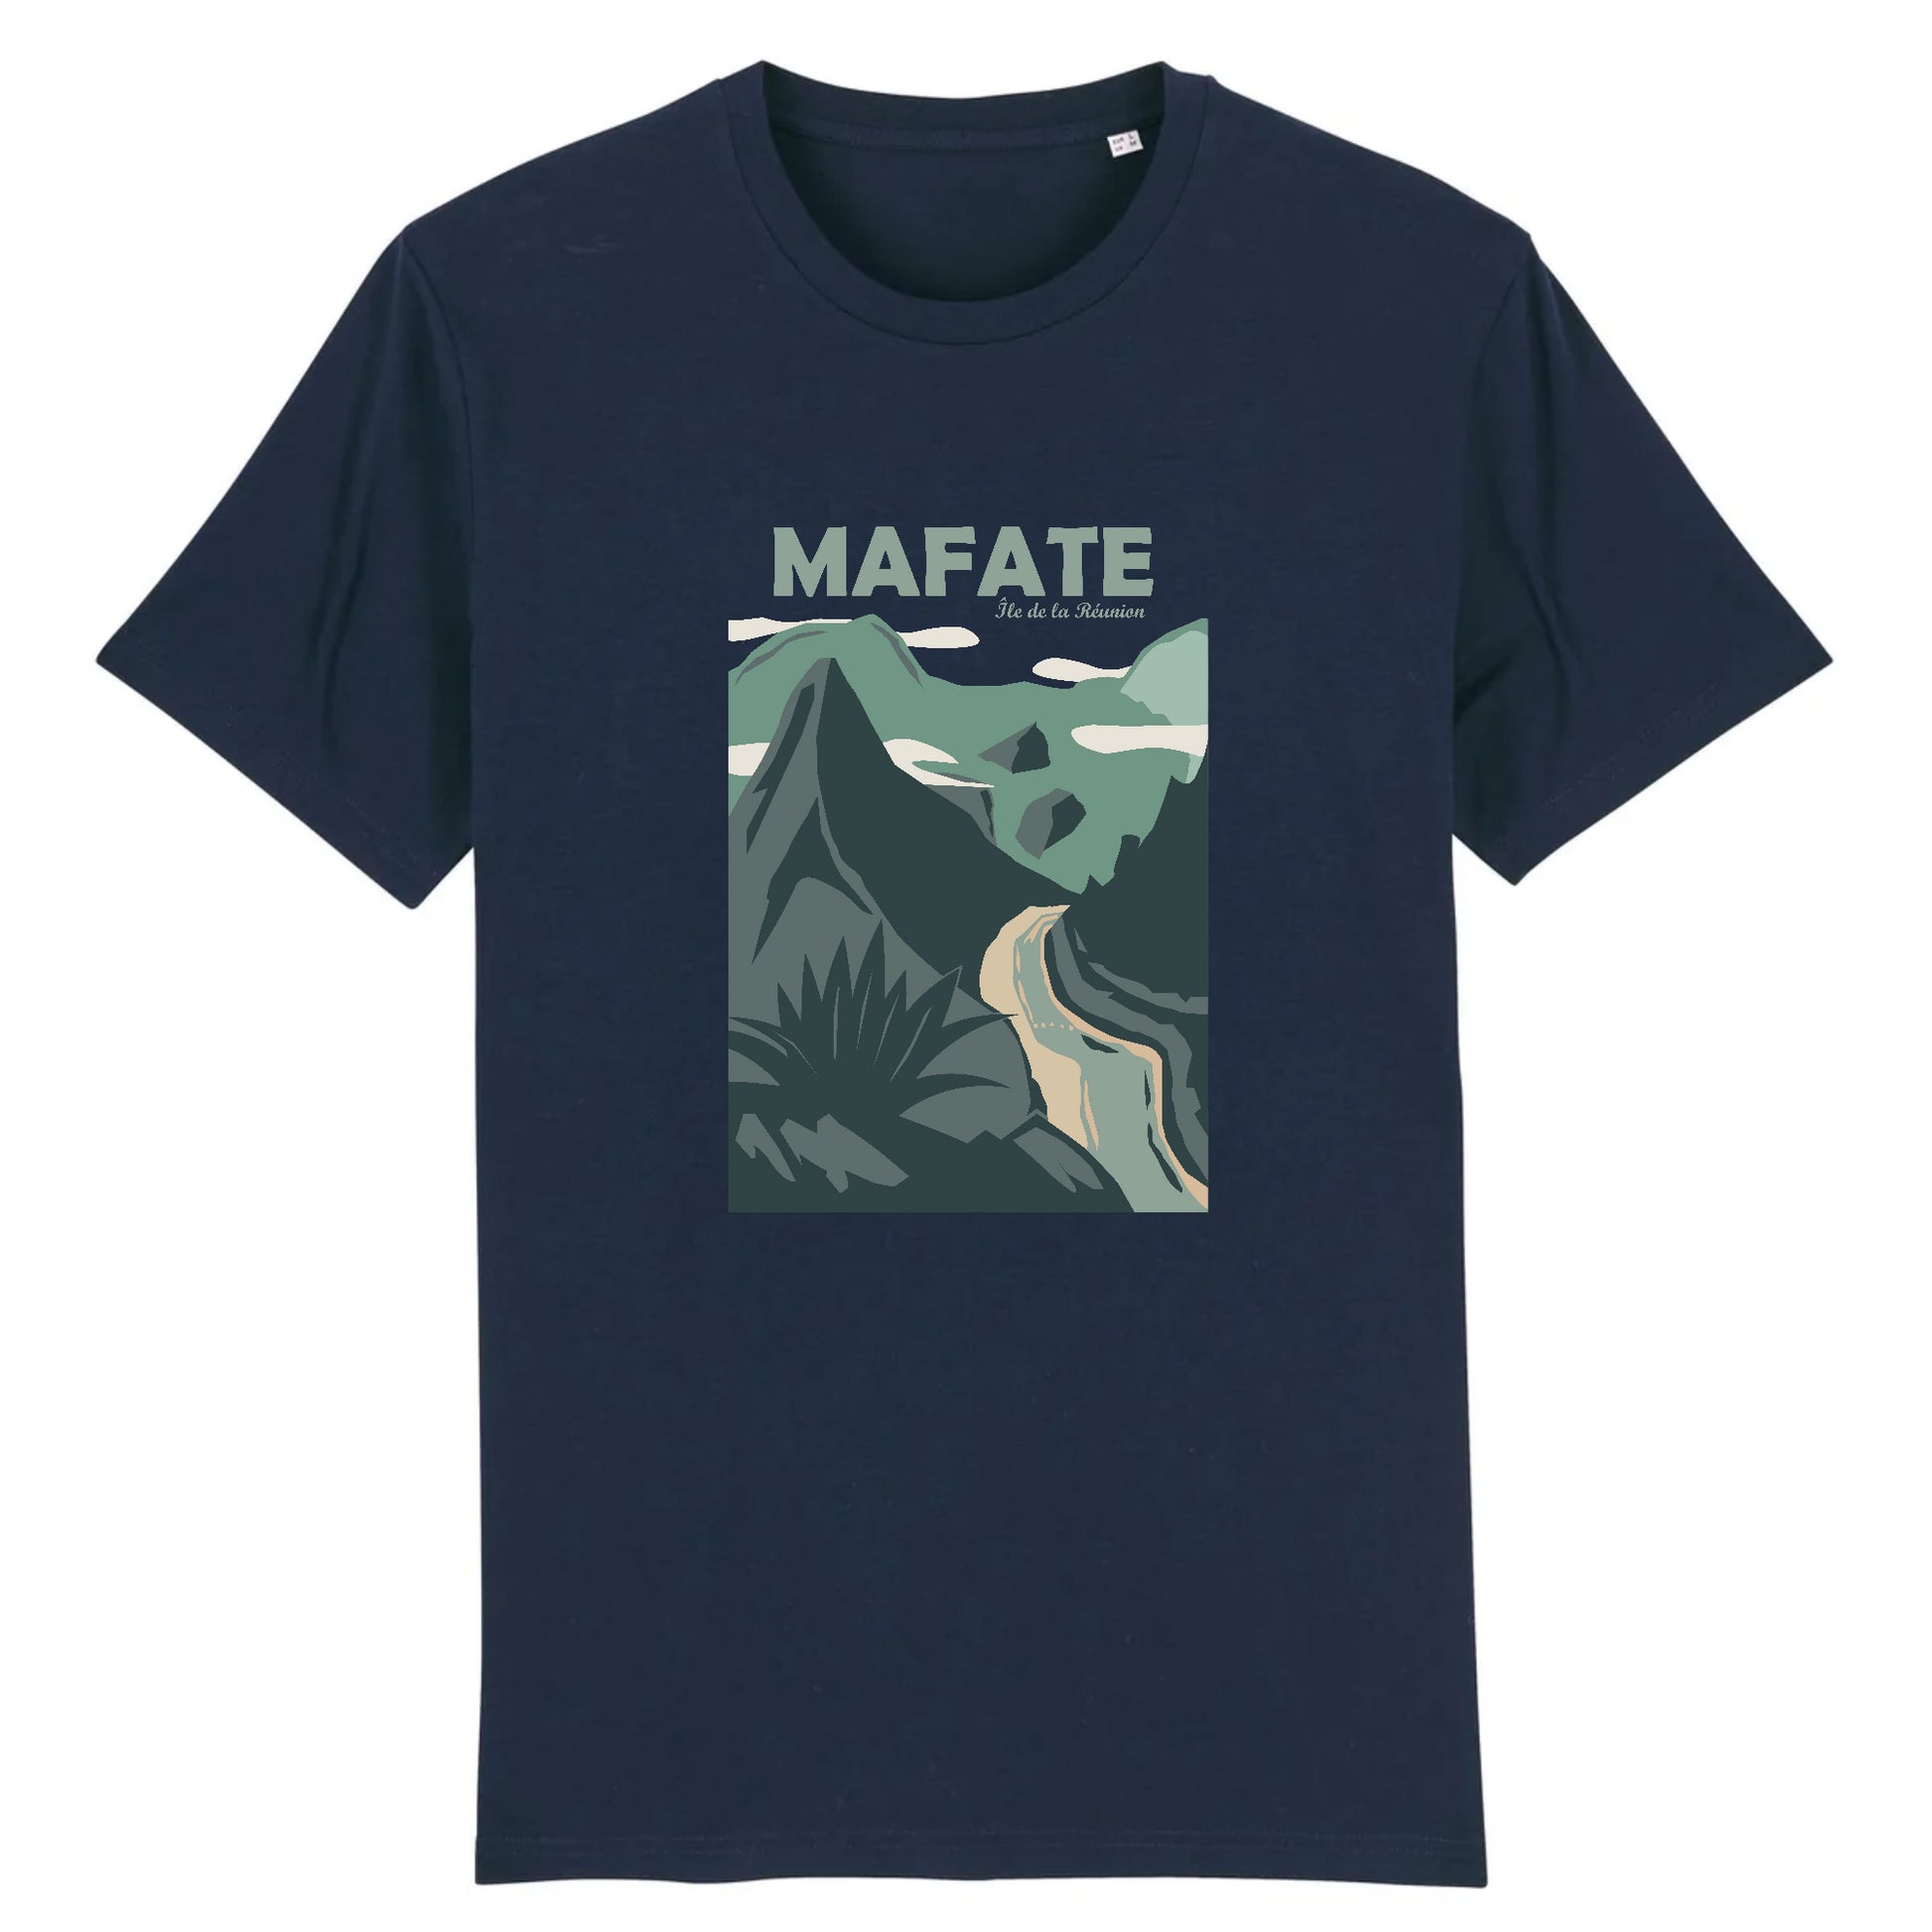 Marine - T-shirt Coton Bio Cirque de Mafate de Sortie Longue pour une escapade en plein air